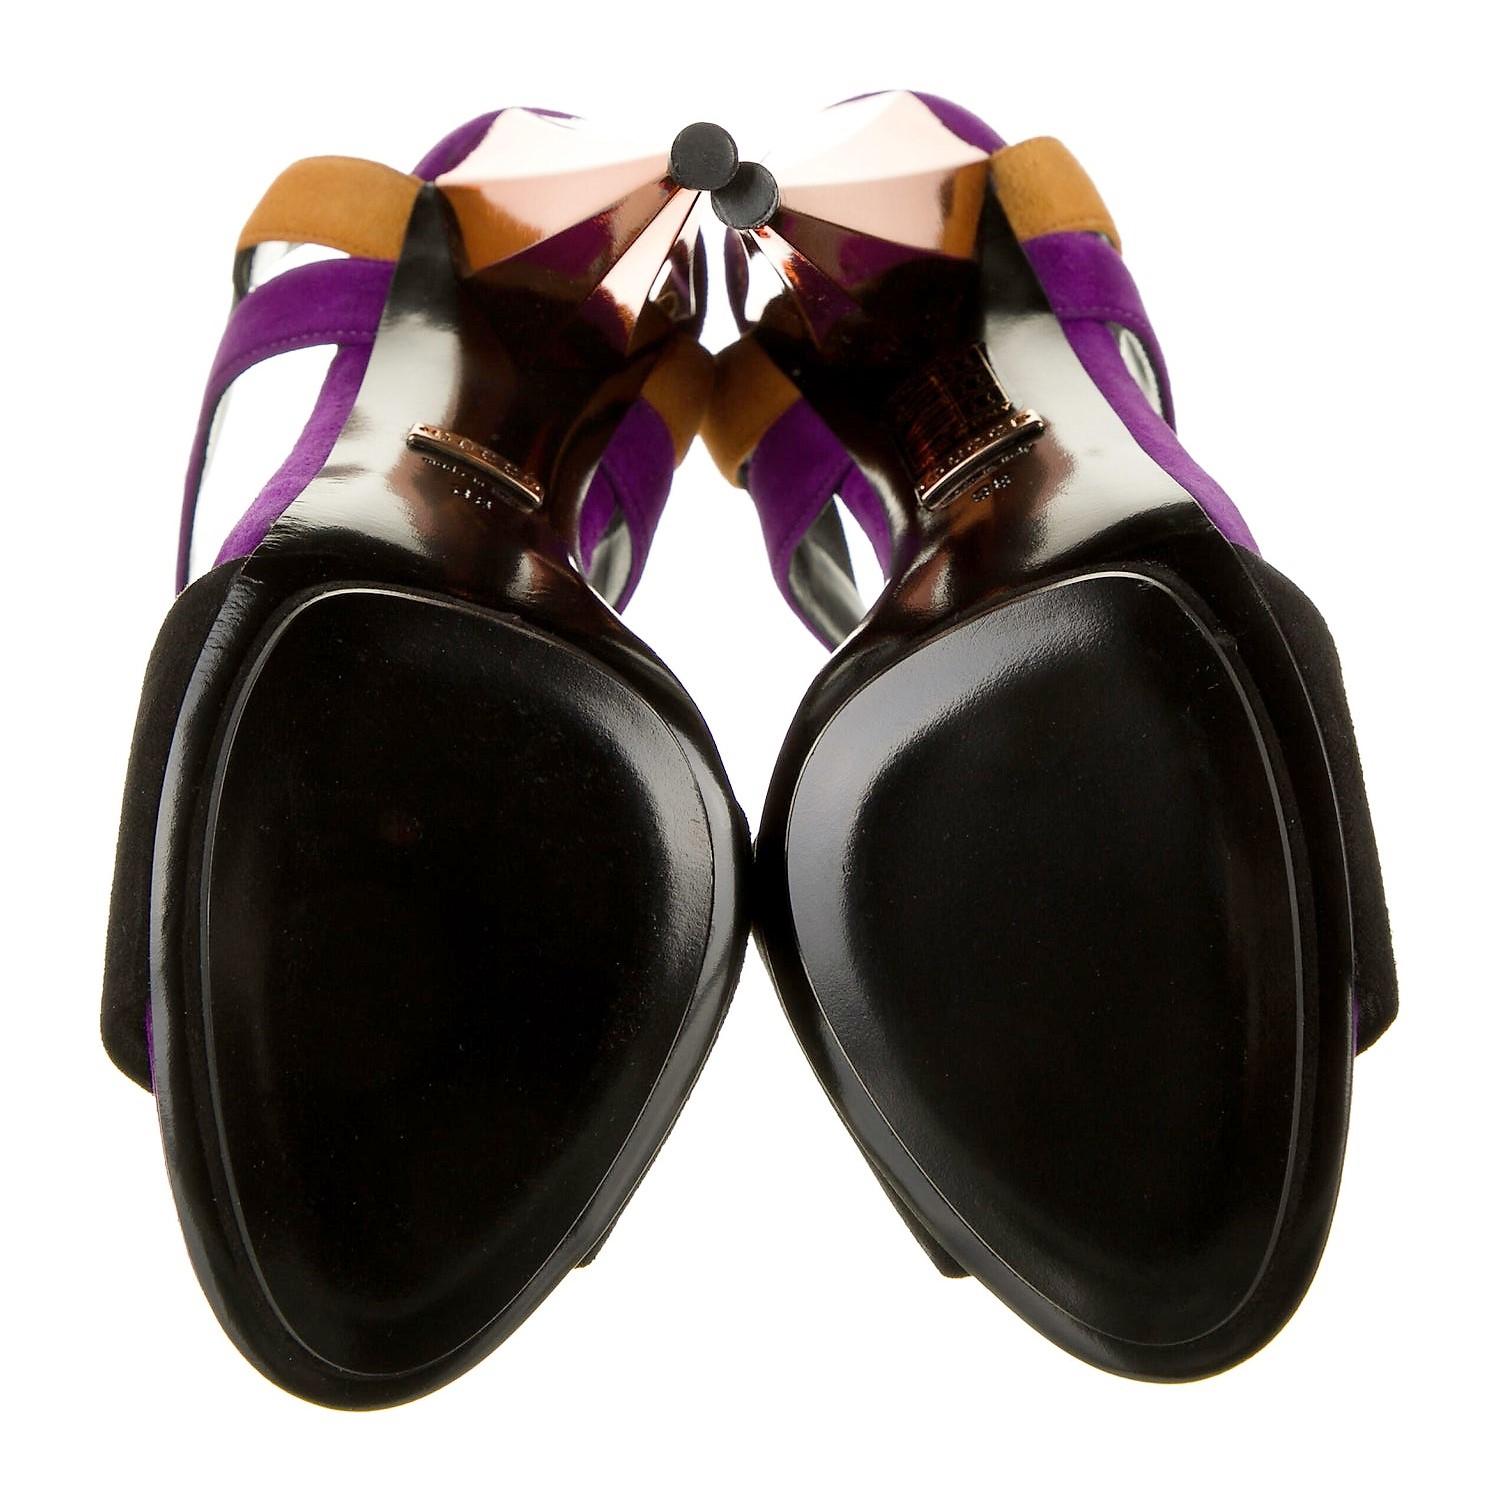 New Gucci Ad Runway 2014 Purple Orange Suede Mirrored Pump Heels Sz 38.5 For Sale 5